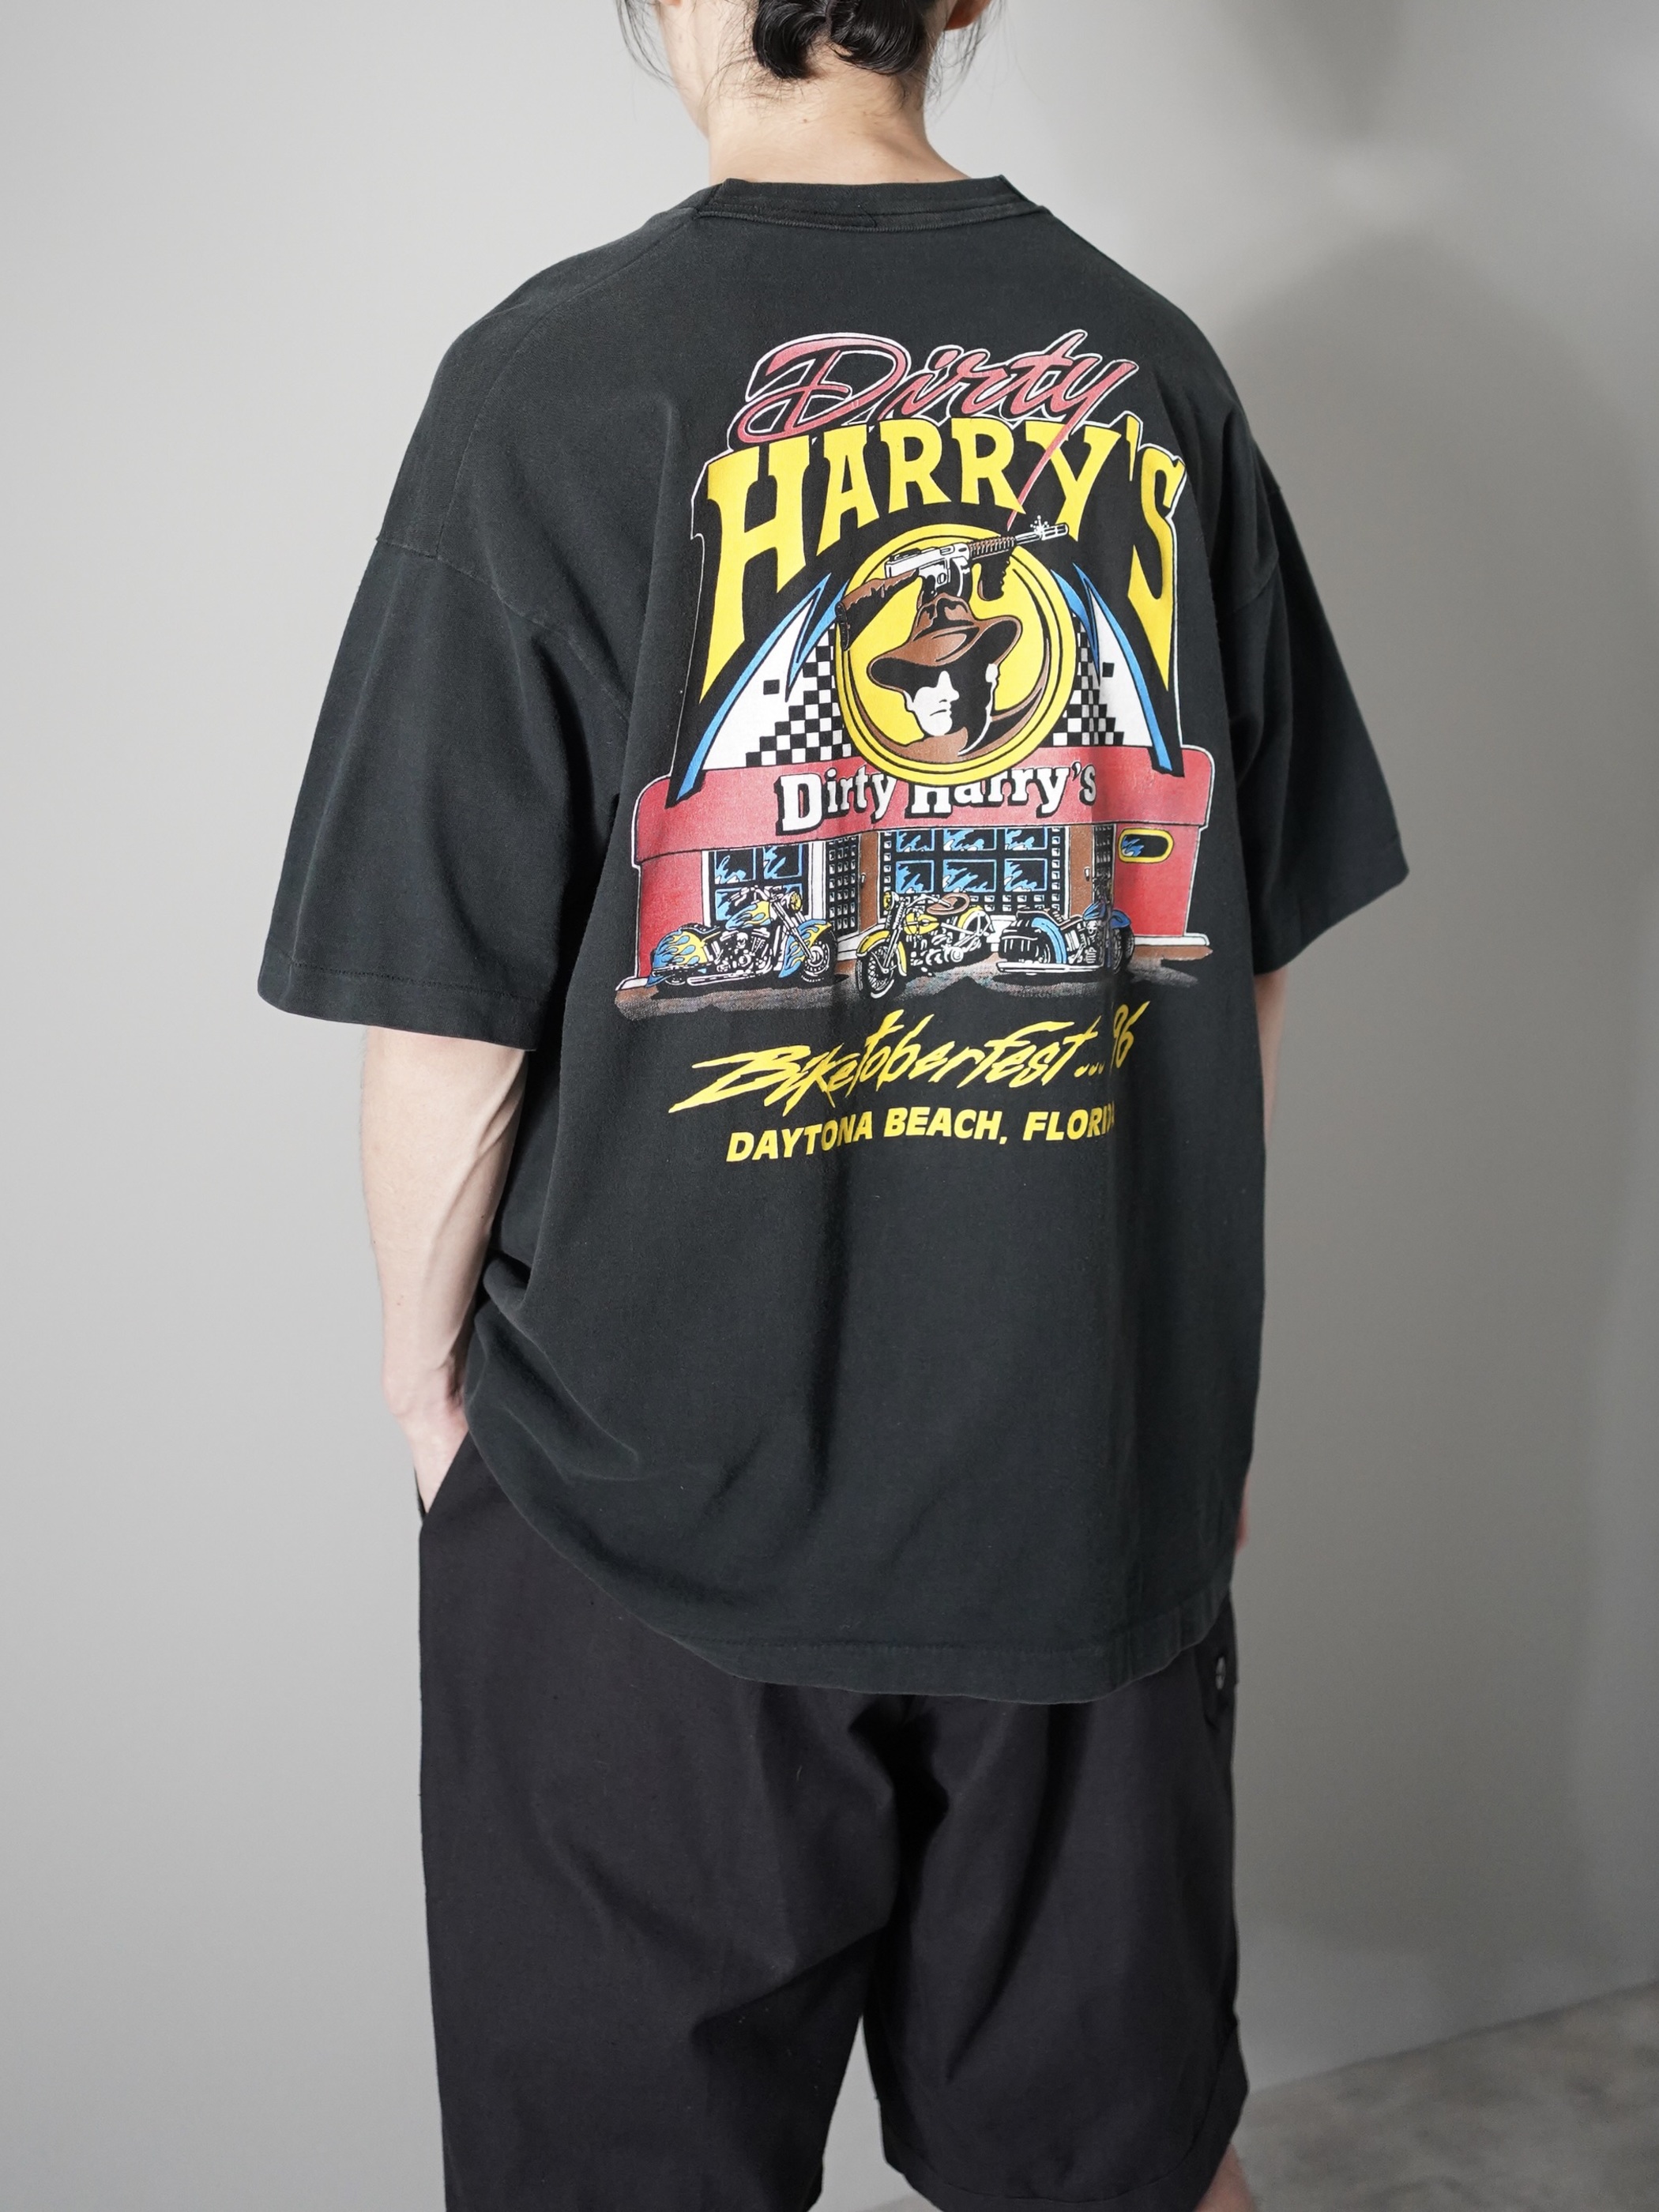 1996's Dirty Harry's 両面print T-shirts 